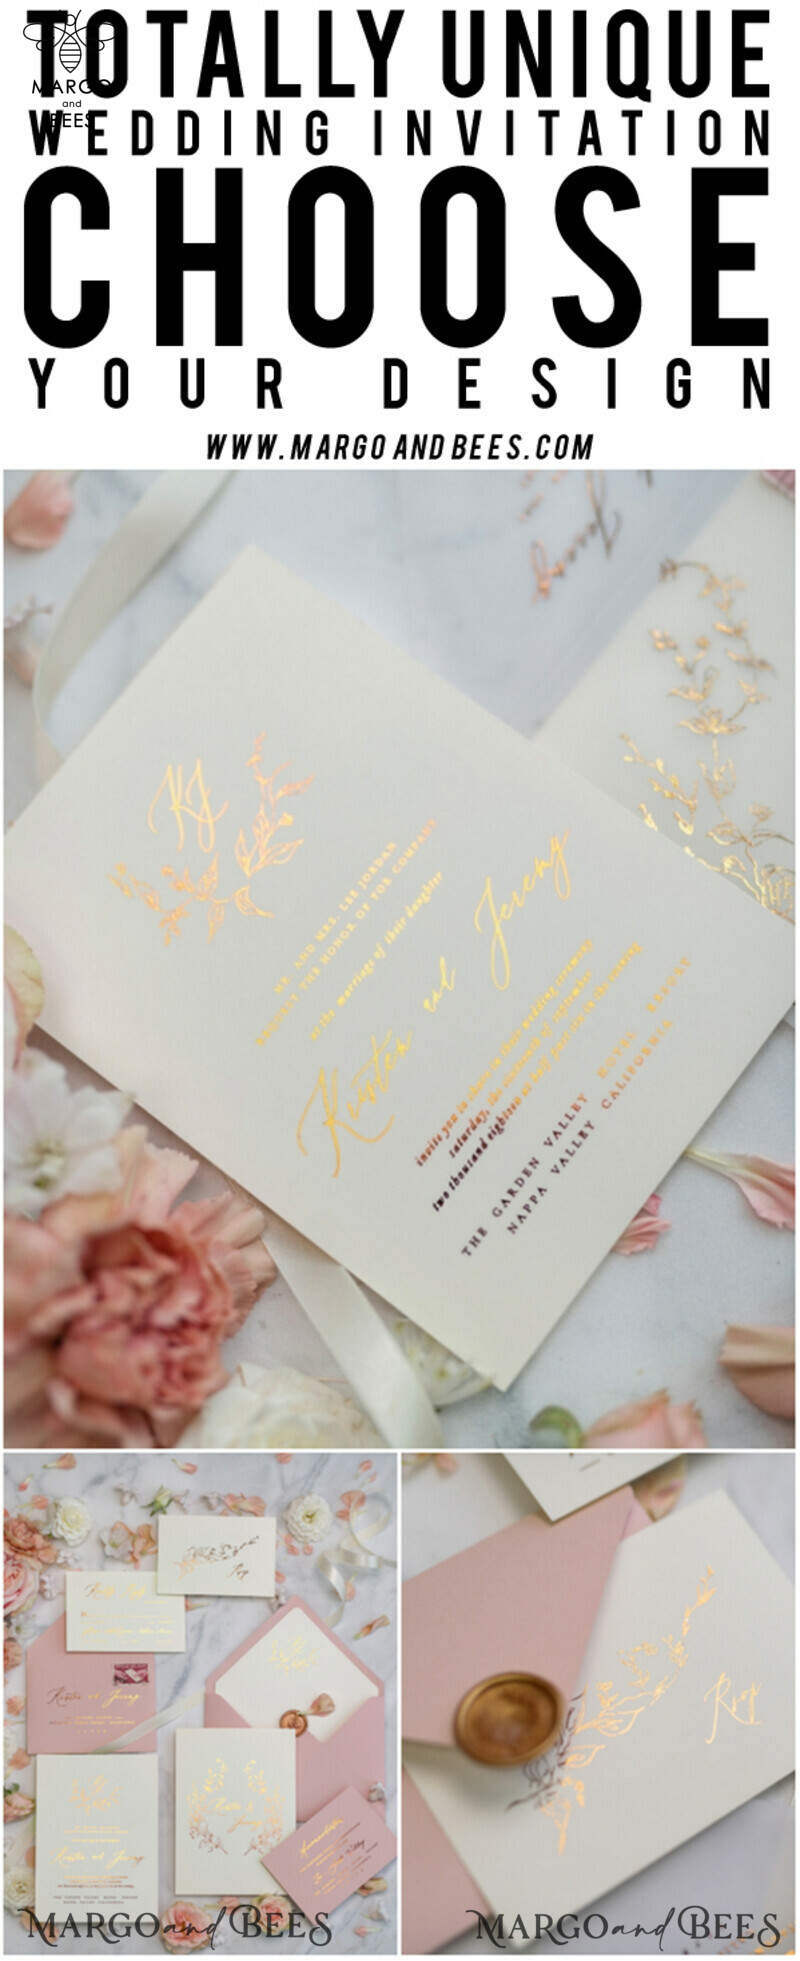 Bespoke Vellum Wedding Invitation Suite: Romantic Blush Pink and Glamour Gold Foil for an Elegant Golden Wedding-43